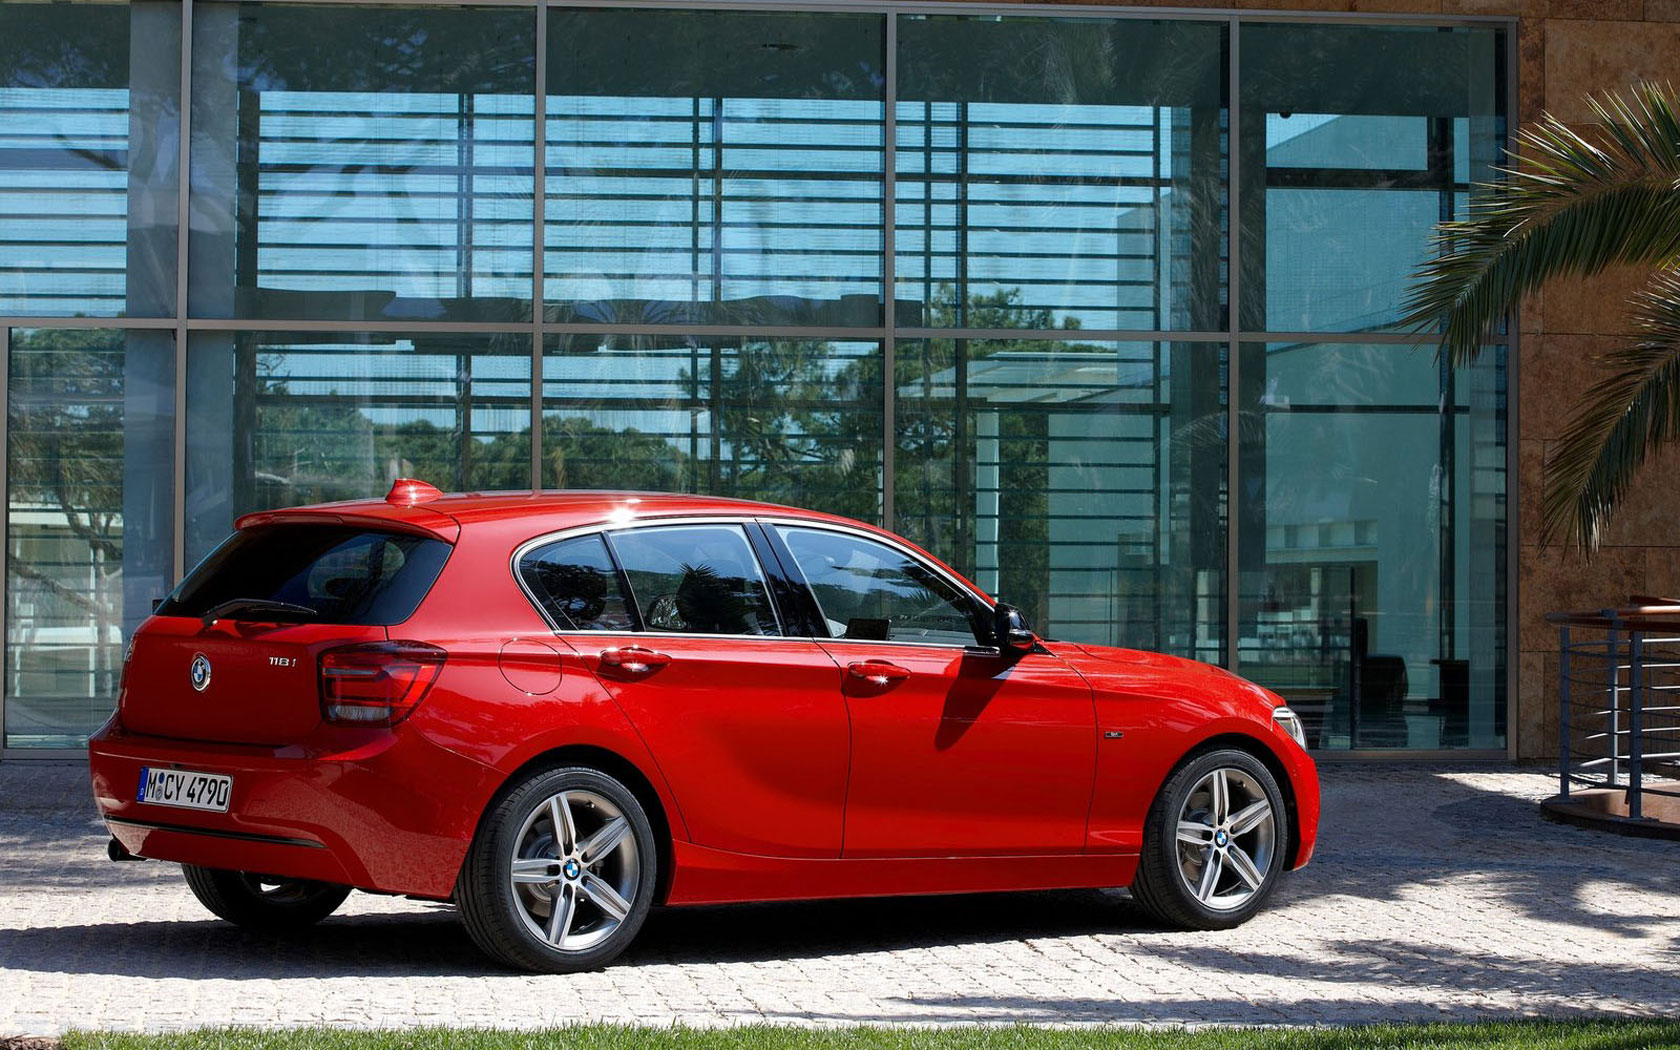  BMW 1-series (2011-2015)